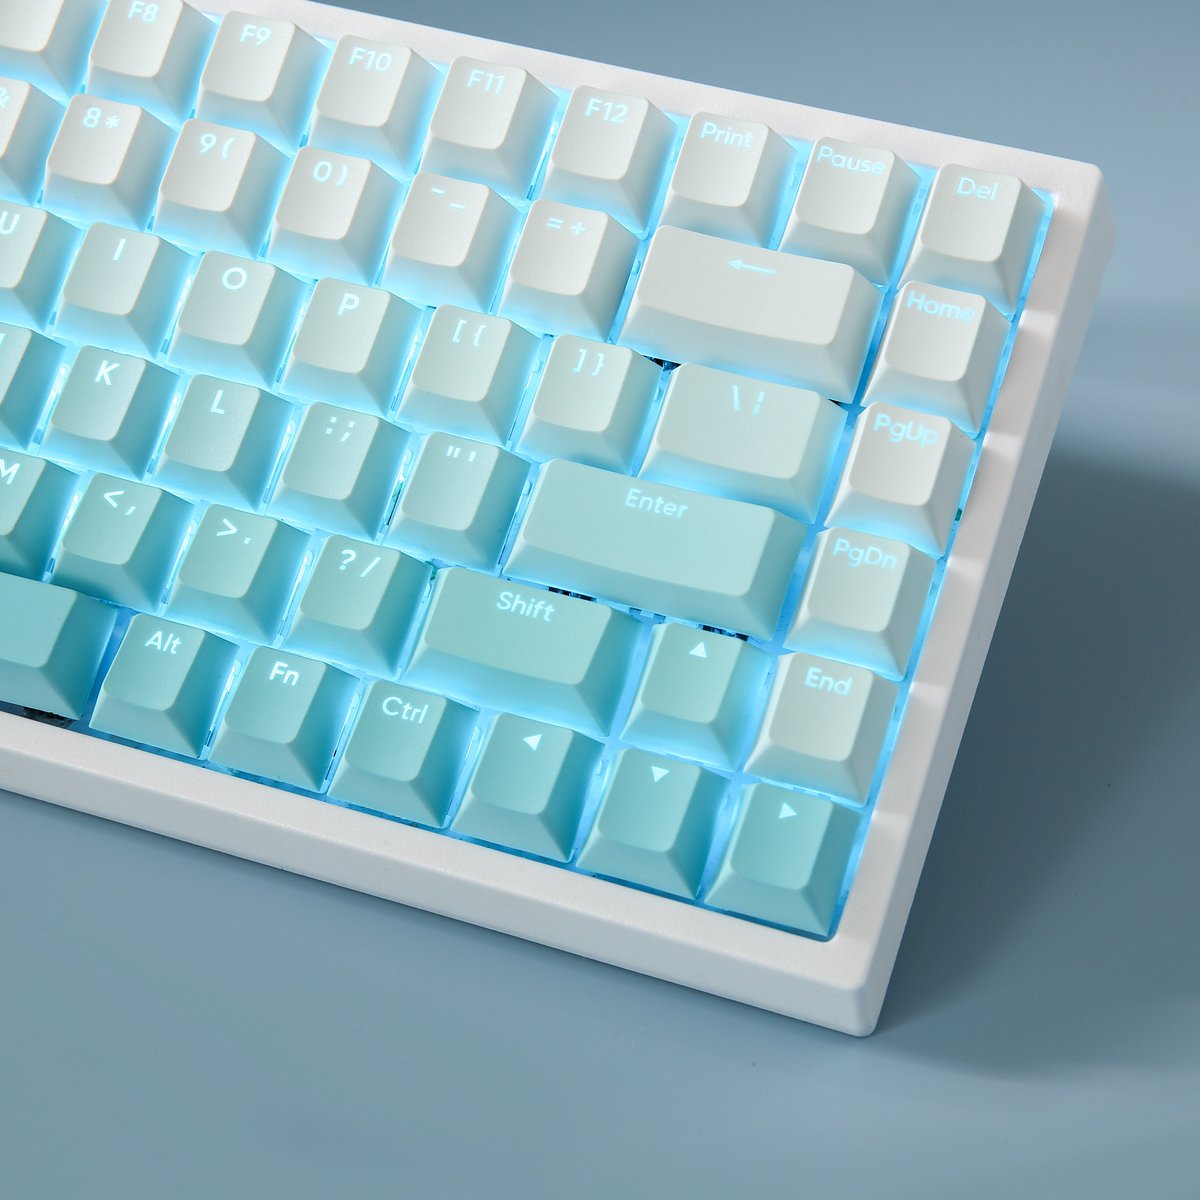 Gradient Ocean Blue Keycap Set

#keyboard #keynovo #keycapset #customkeyboard #MechanicalKeyboard